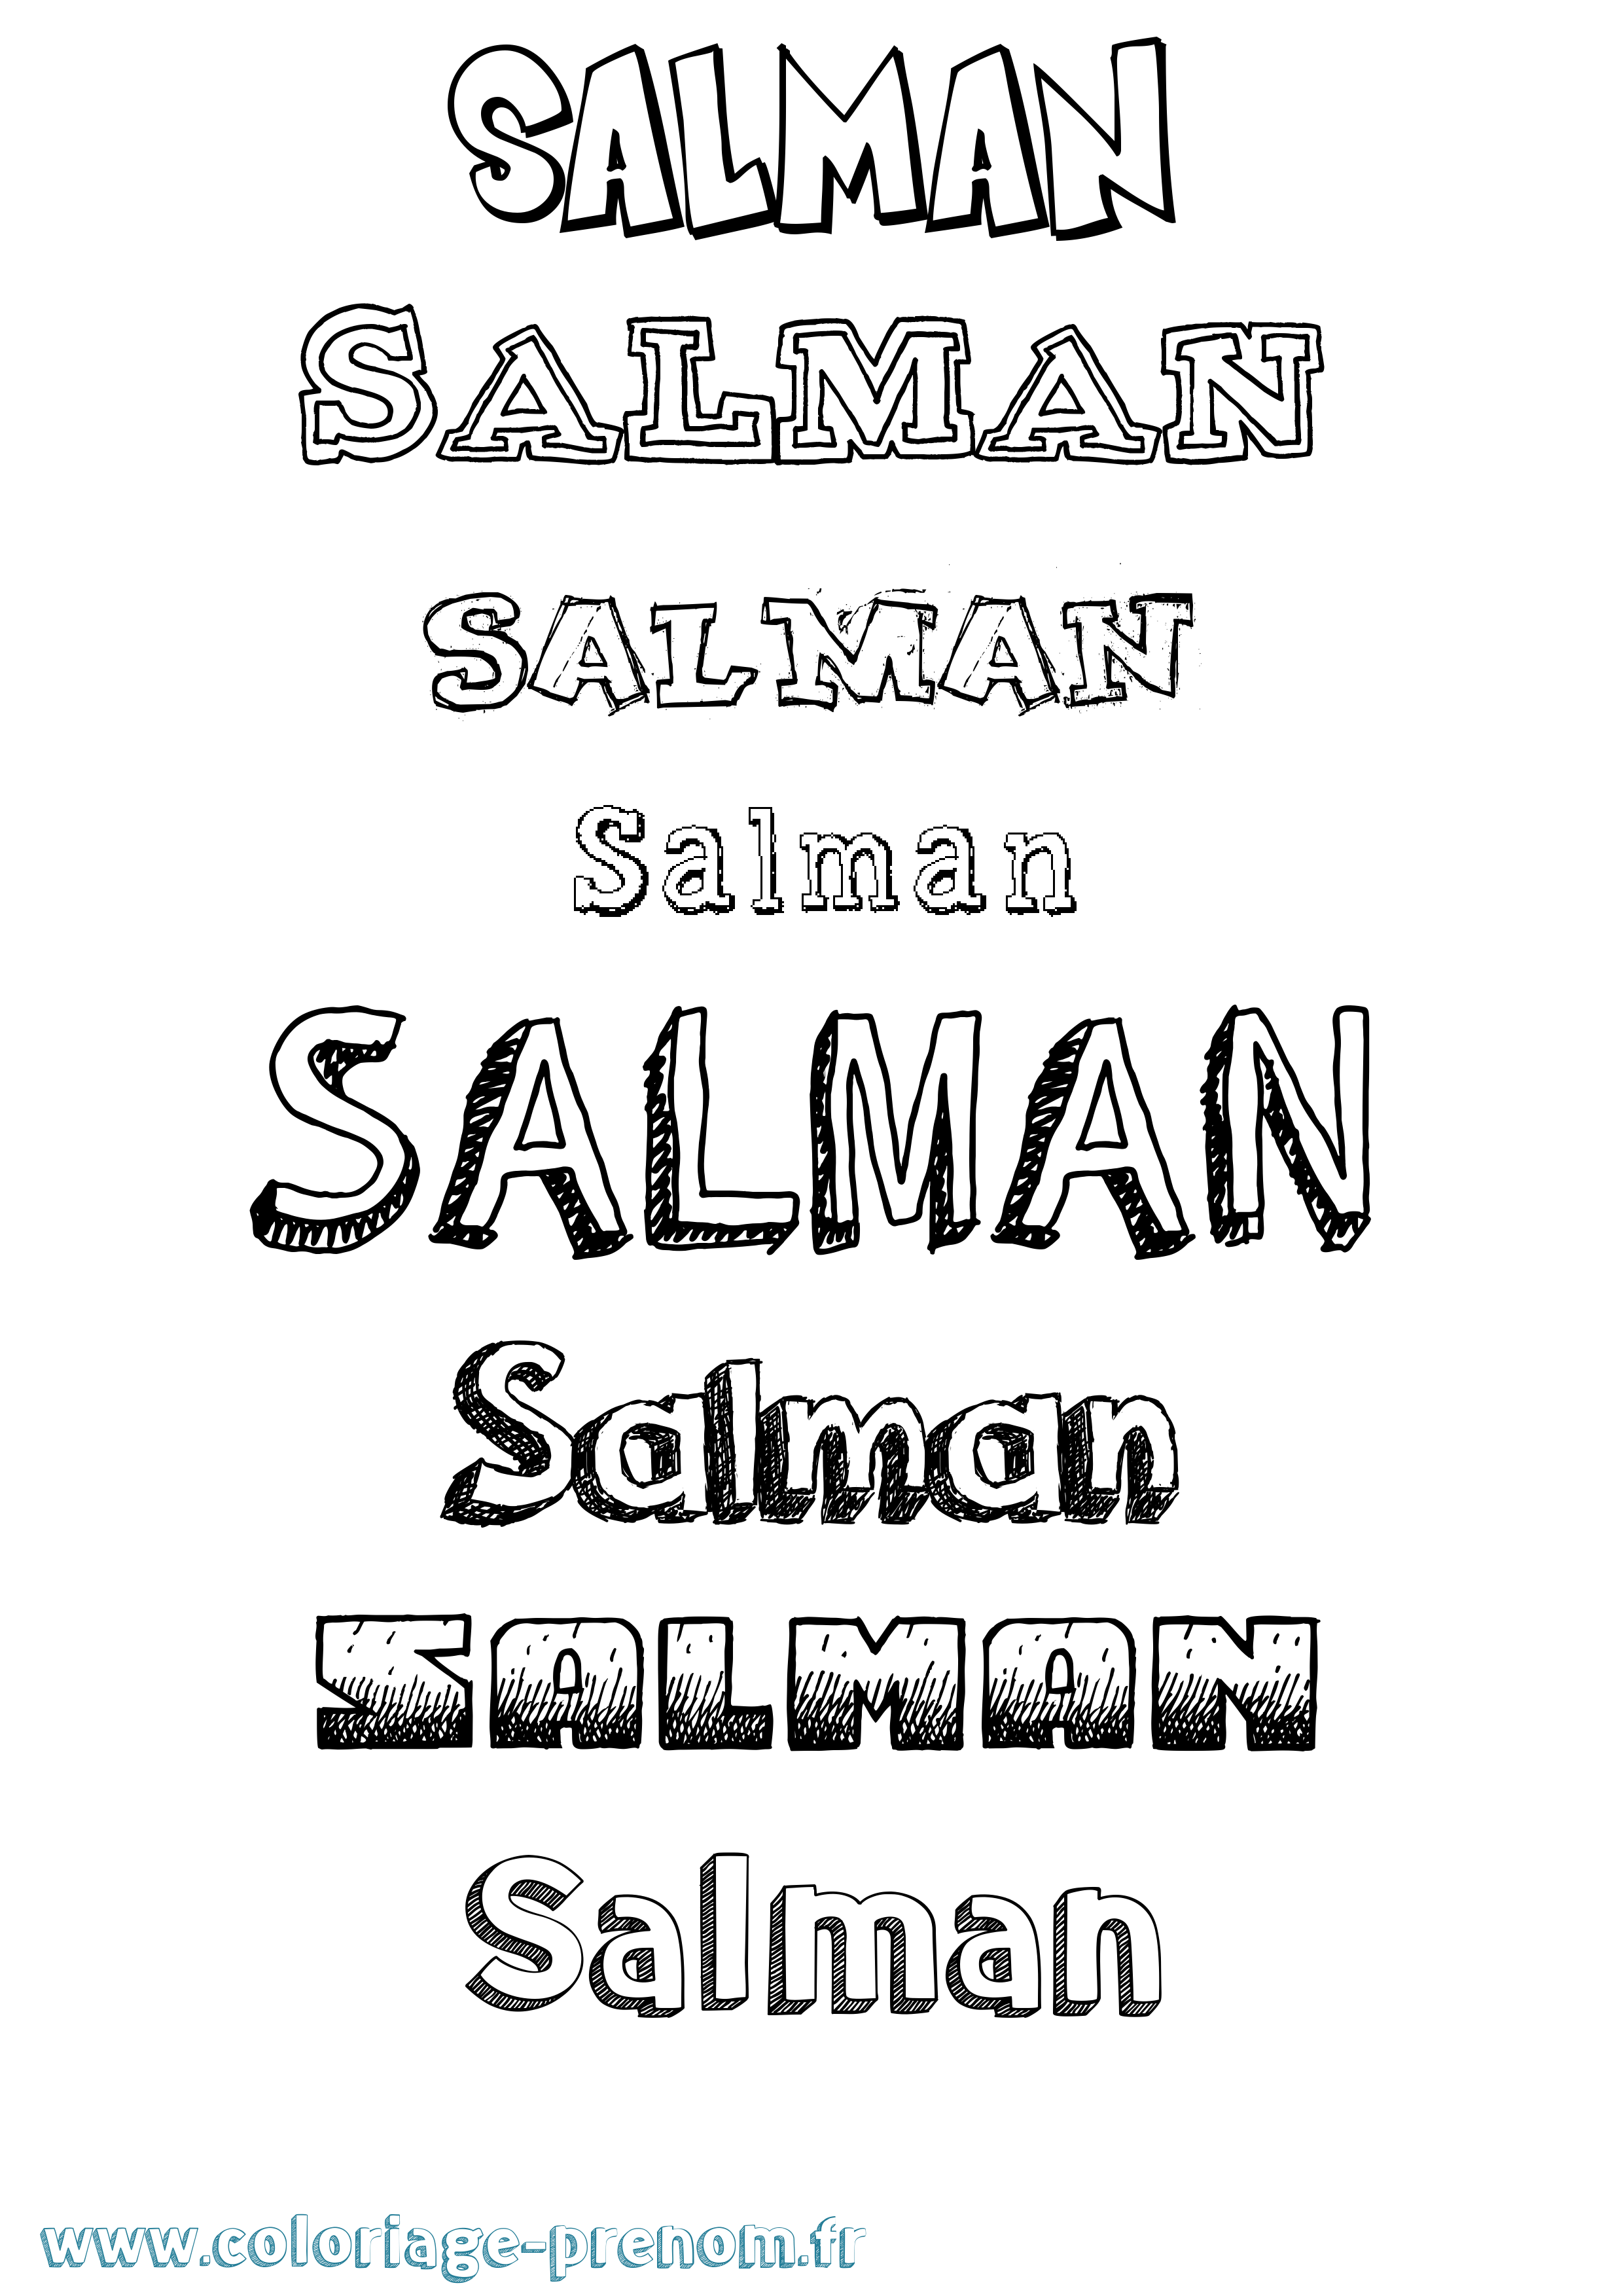 Coloriage prénom Salman Dessiné